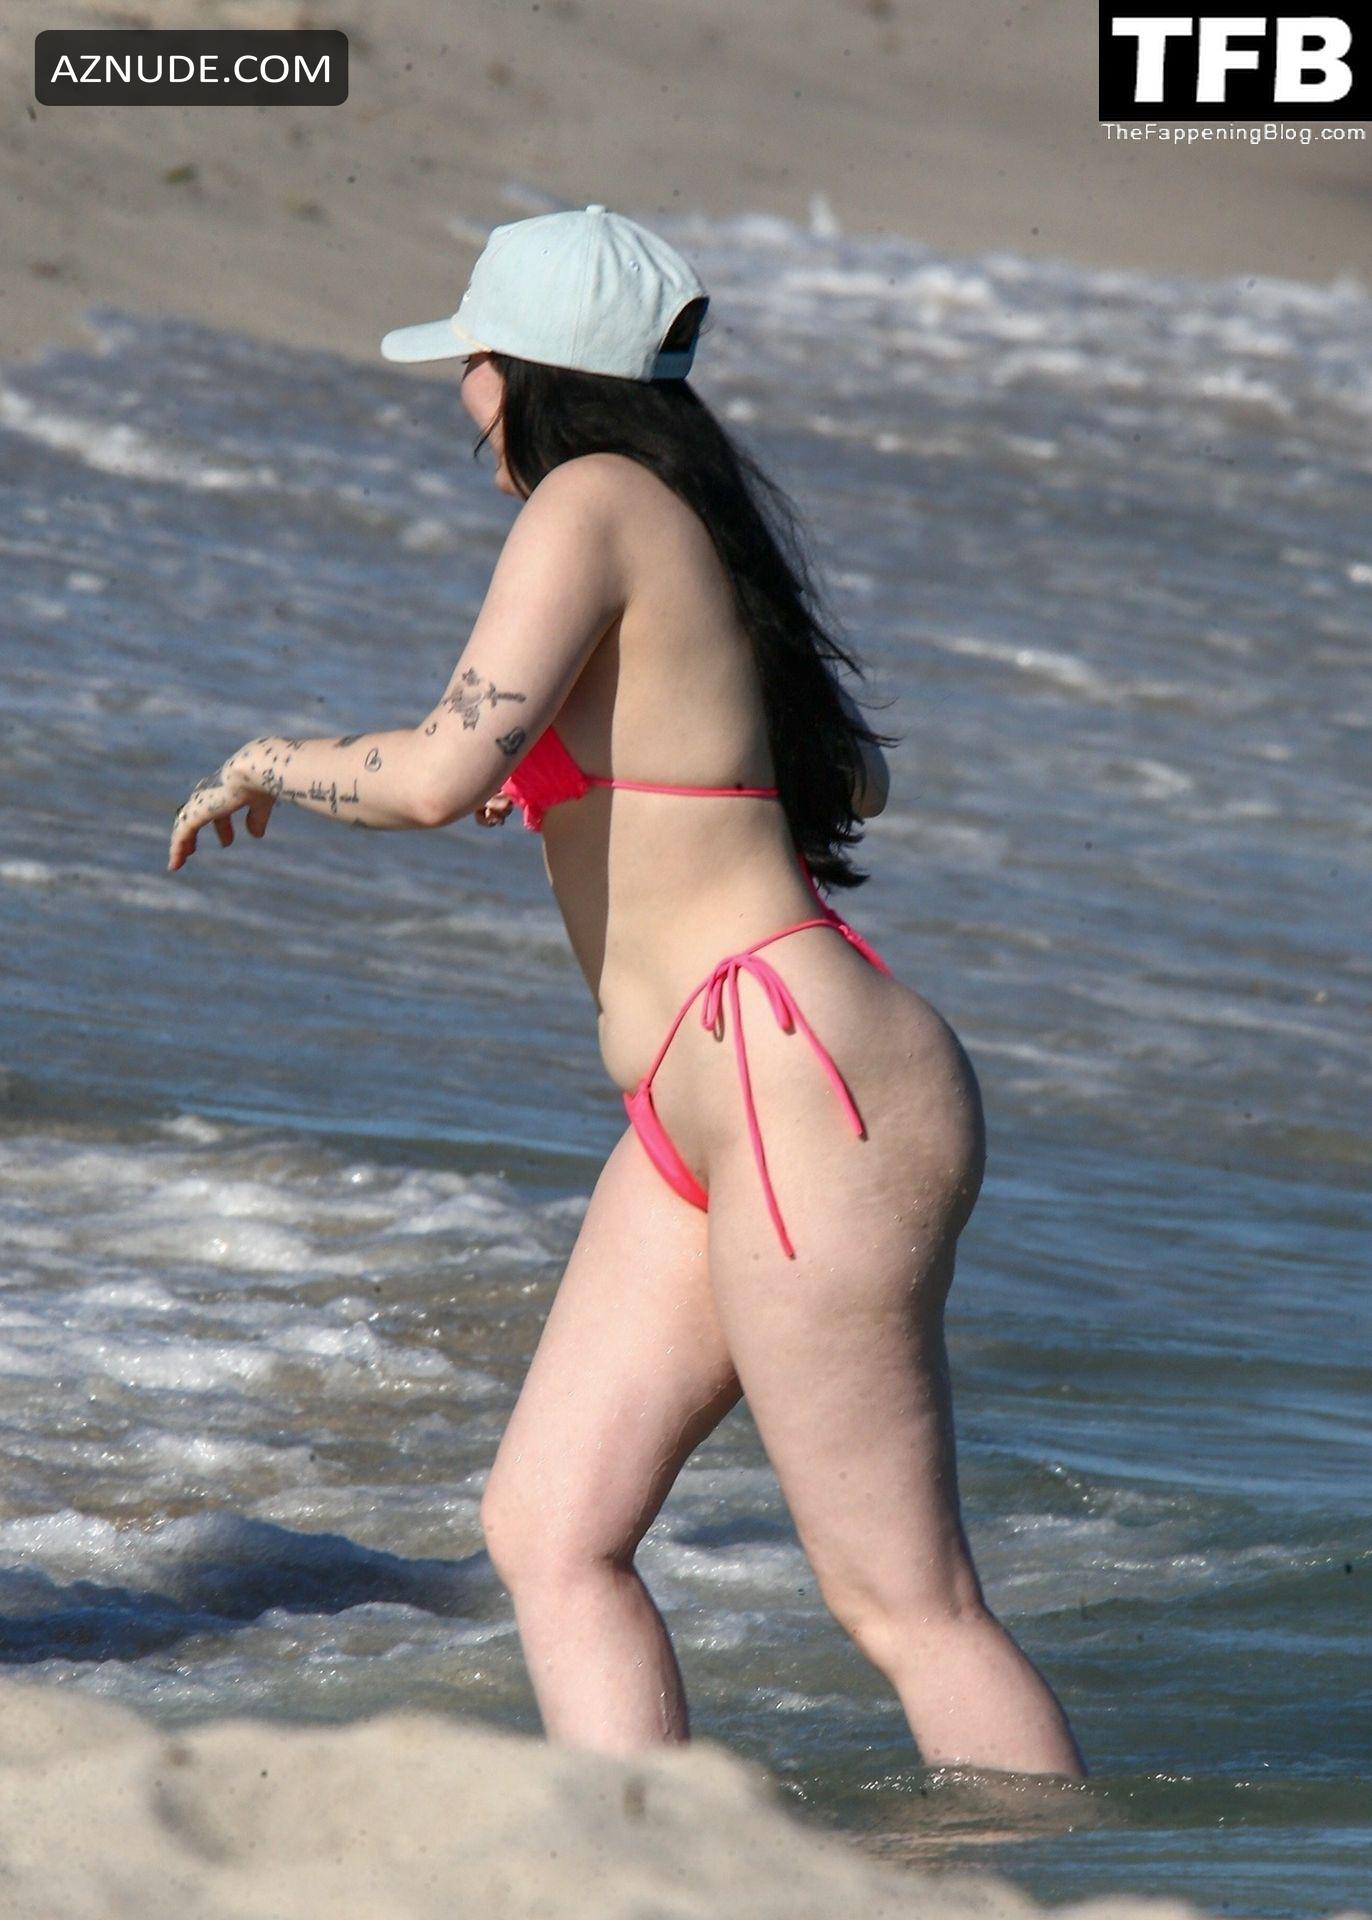 Beach Bikini Ass Tits Sex - Noah Cyrus Sexy Seen Flaunting Her Hot Tits And Ass In A Bikini At The Beach  in Miami - AZNude